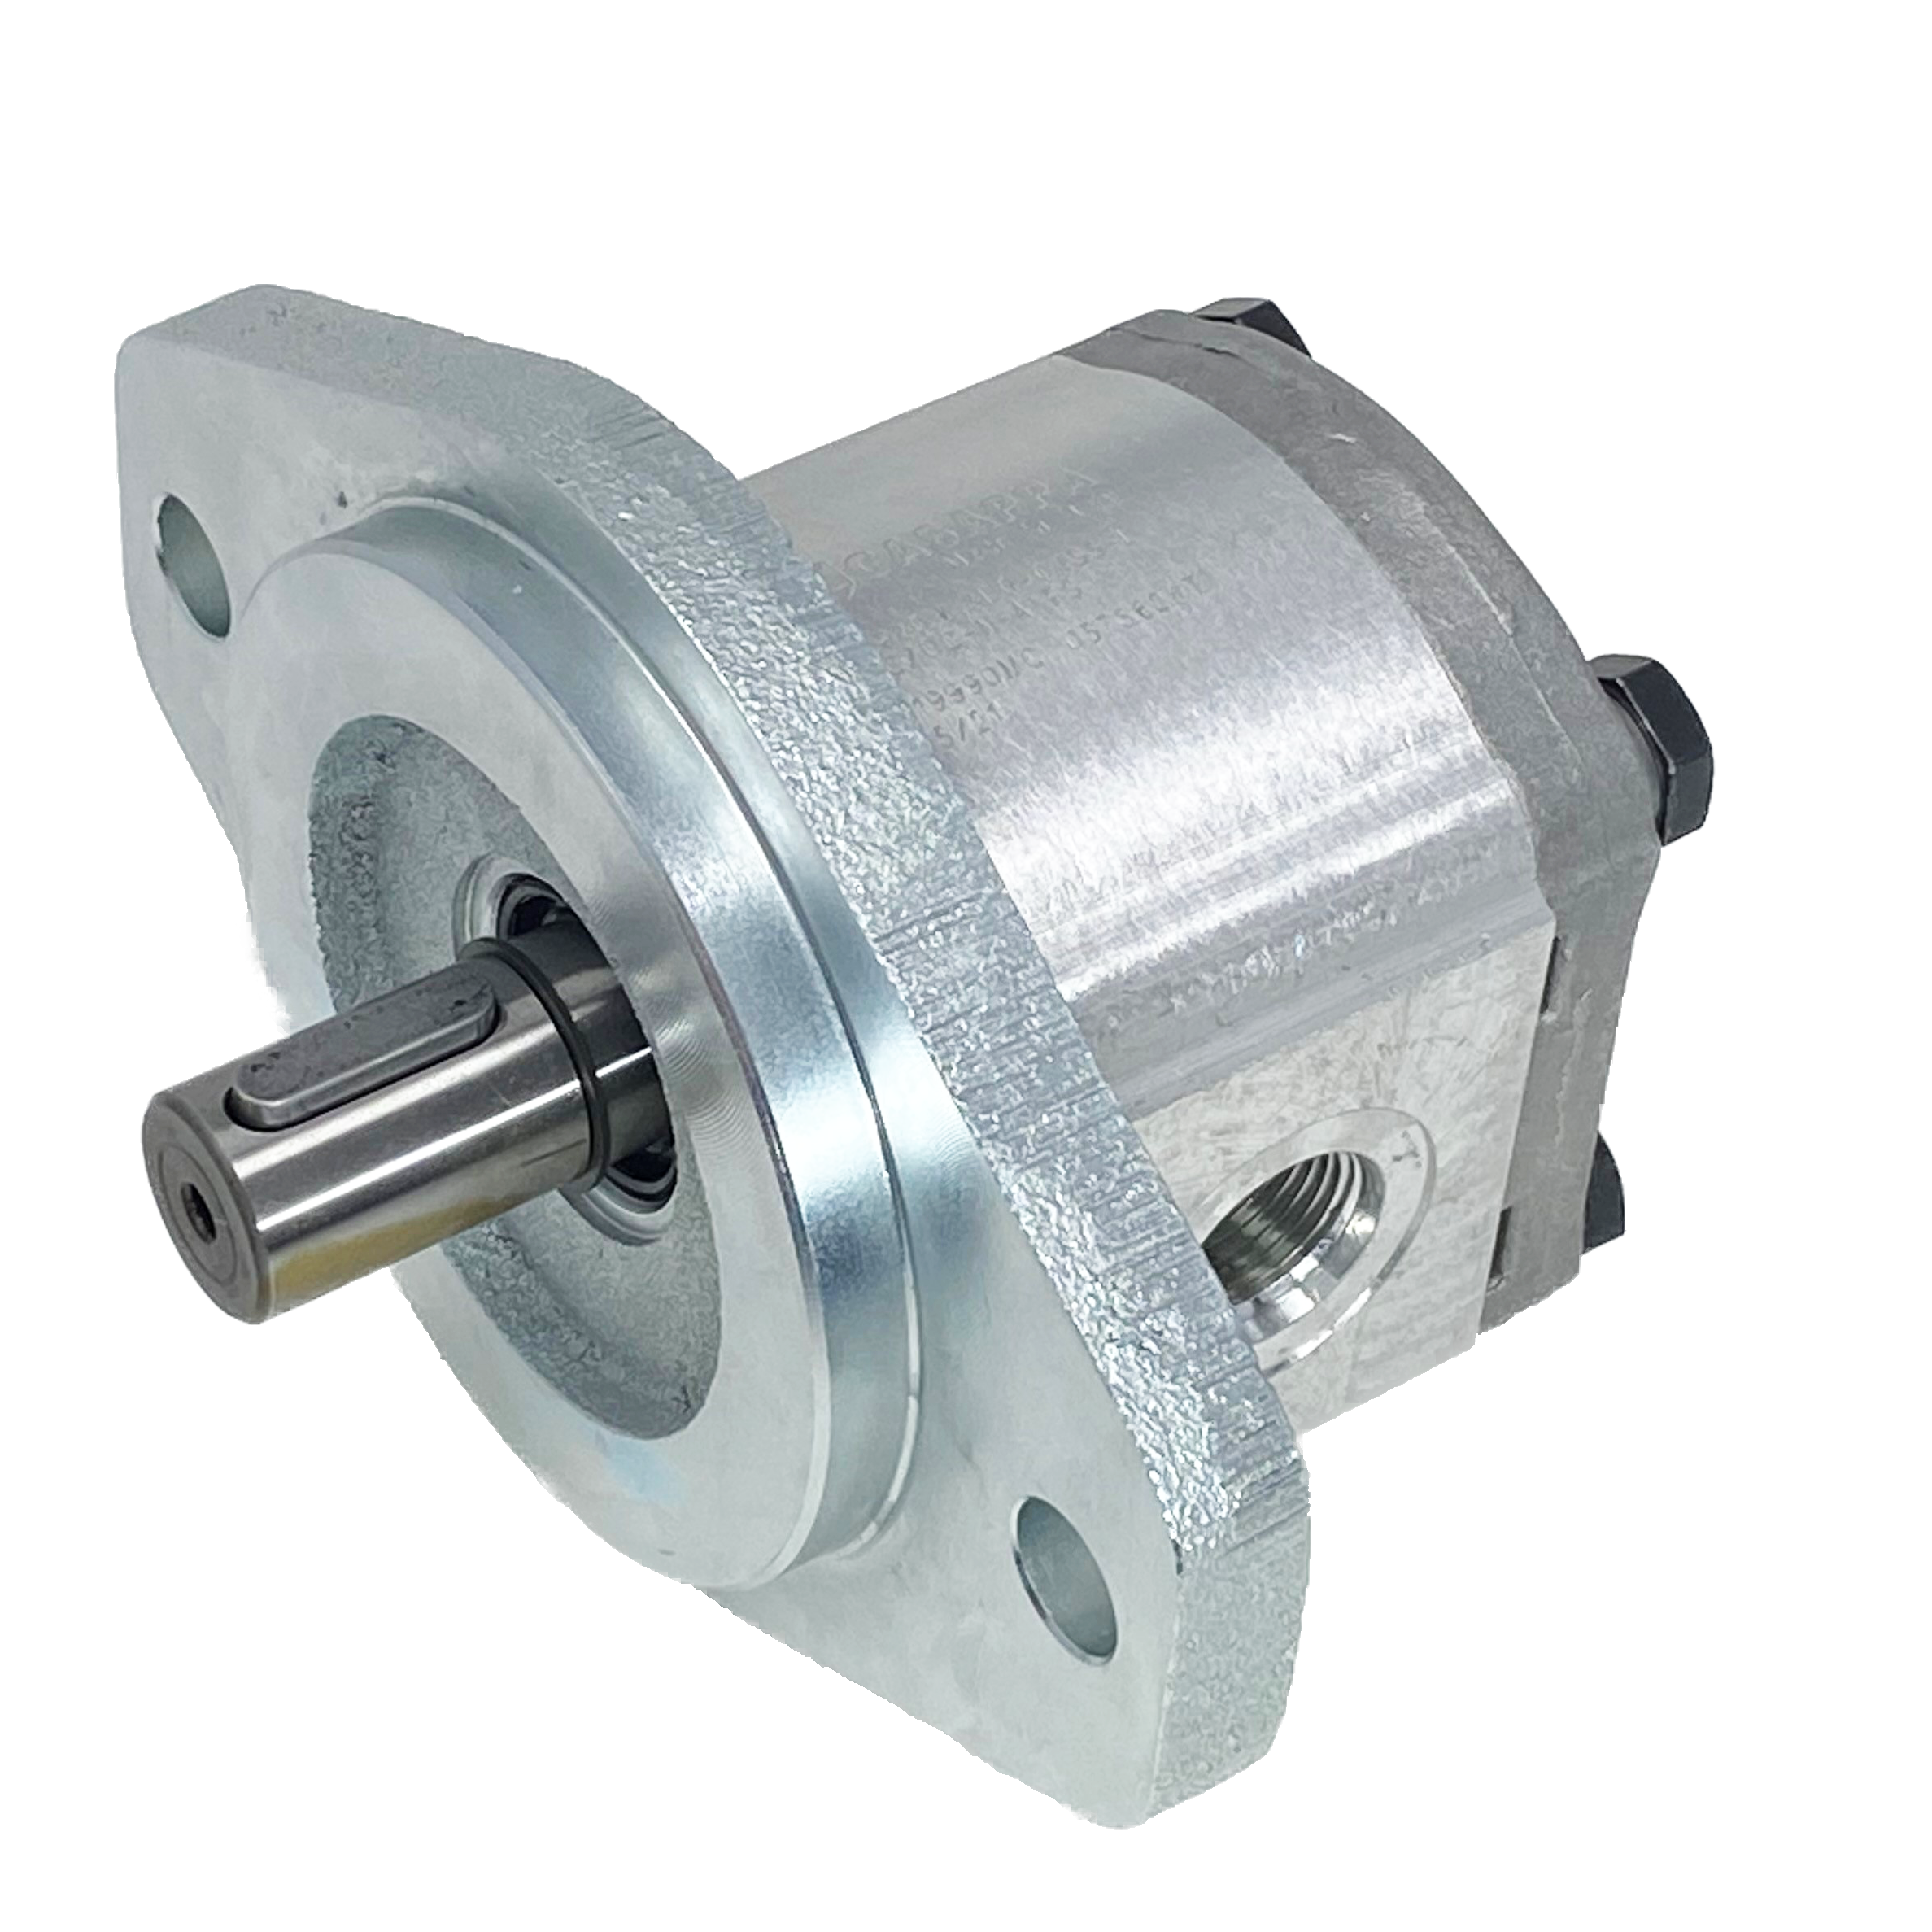 PLM20.9R0-32S5-LOC/OC-N-L : Casappa Polaris Gear Motor, 9.17cc, 3625psi, 3500RPM, Reversible, External Drain, 3/4" Bore x 1/4" Key Shaft, SAE B 2-Bolt Flange, 0.625 (5/8") #10 SAE In, 0.625 (5/8") #10 SAE Out, Aluminum Body, Cast Iron Flange